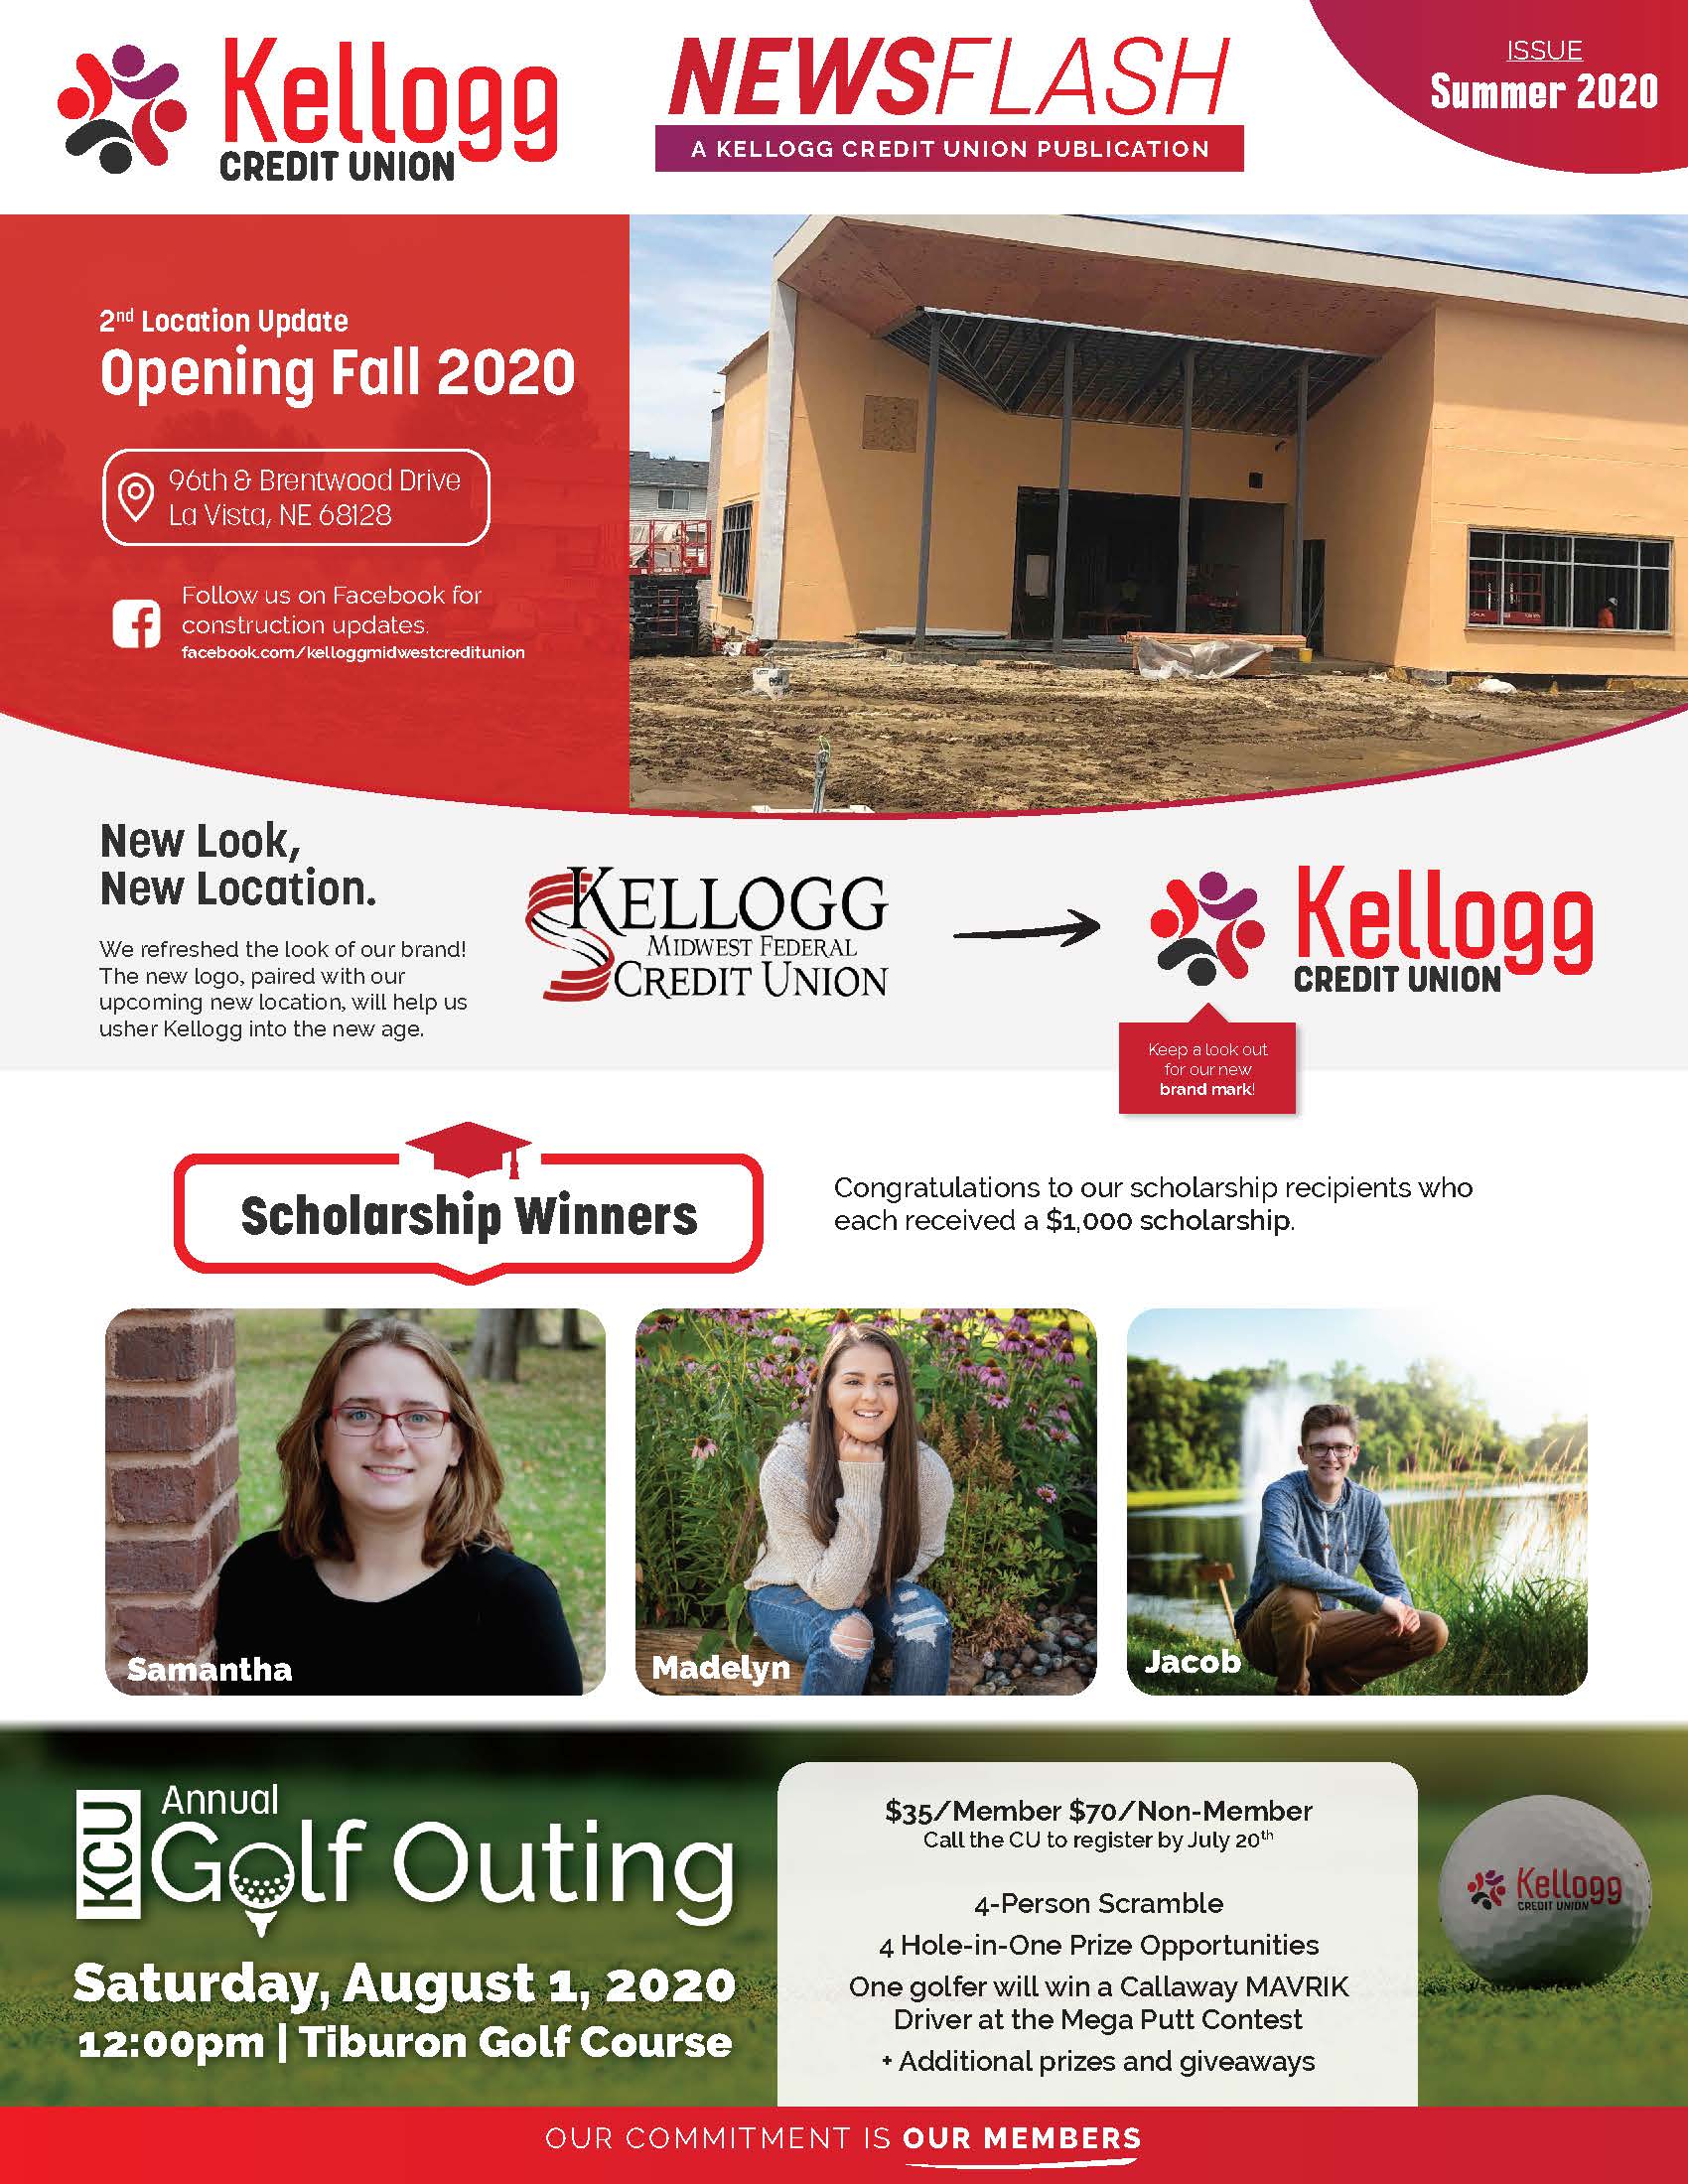 Kellogg News FLash Summer 2020